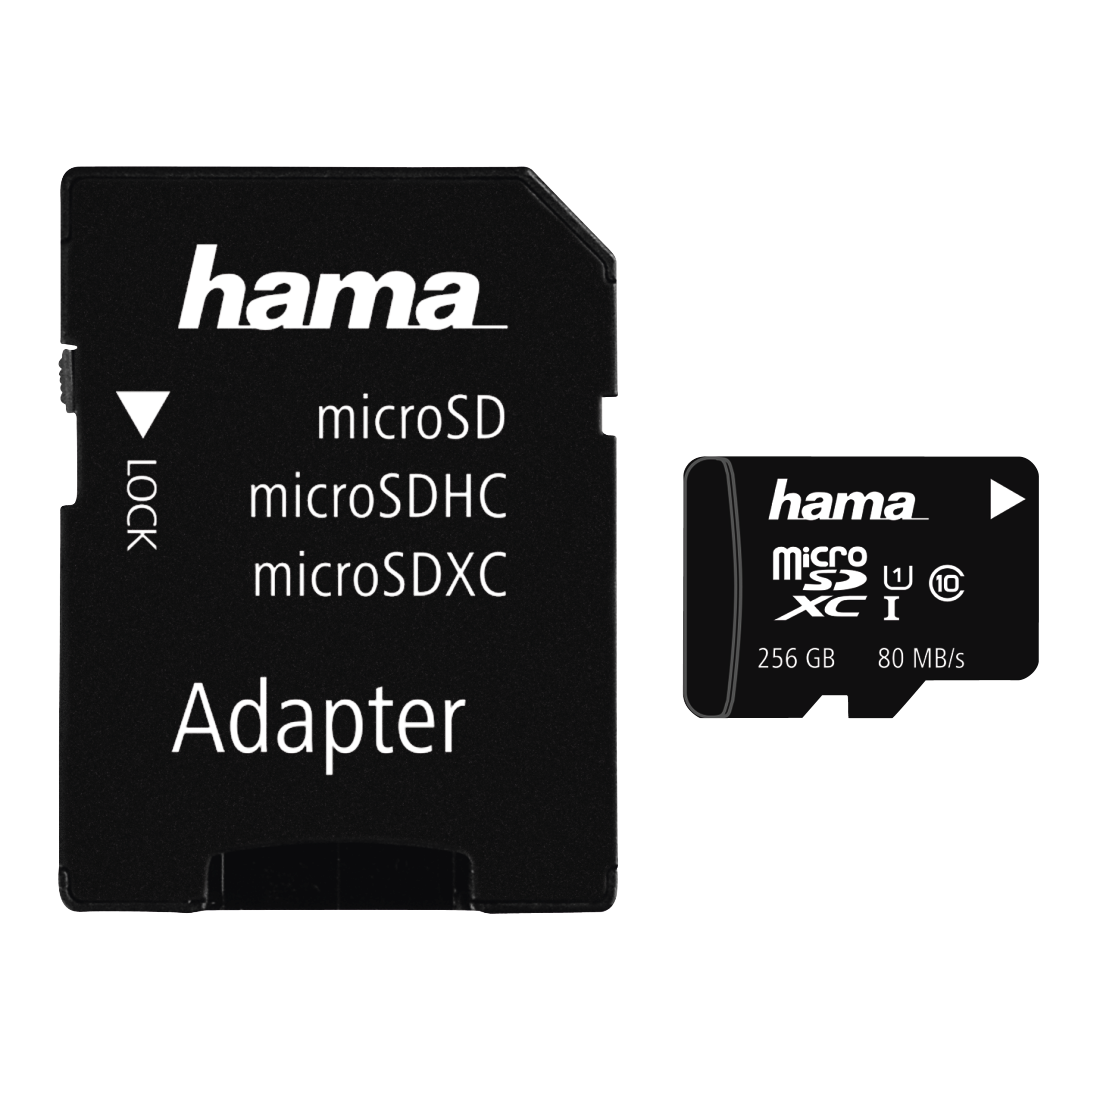 Hama microSDHC 256GB